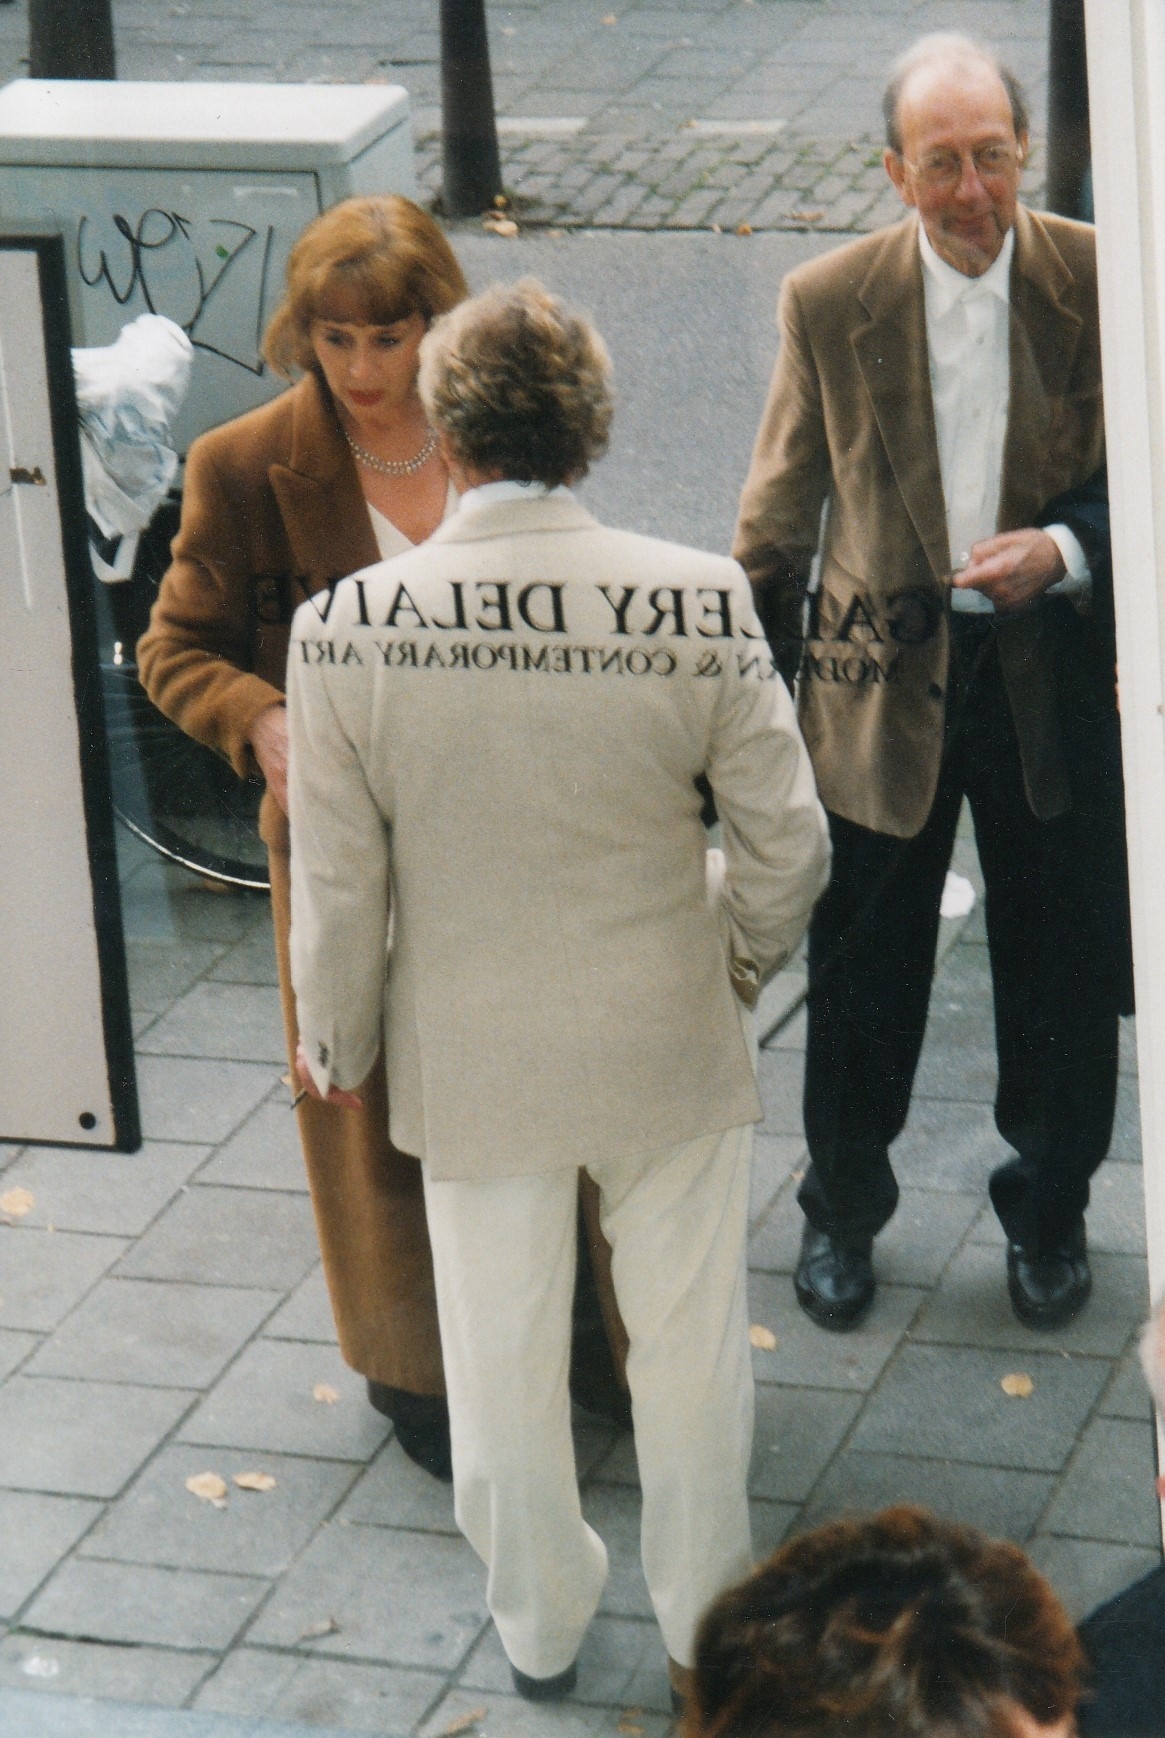 Trudy, Jan de Bouvrie and Constant, 2000